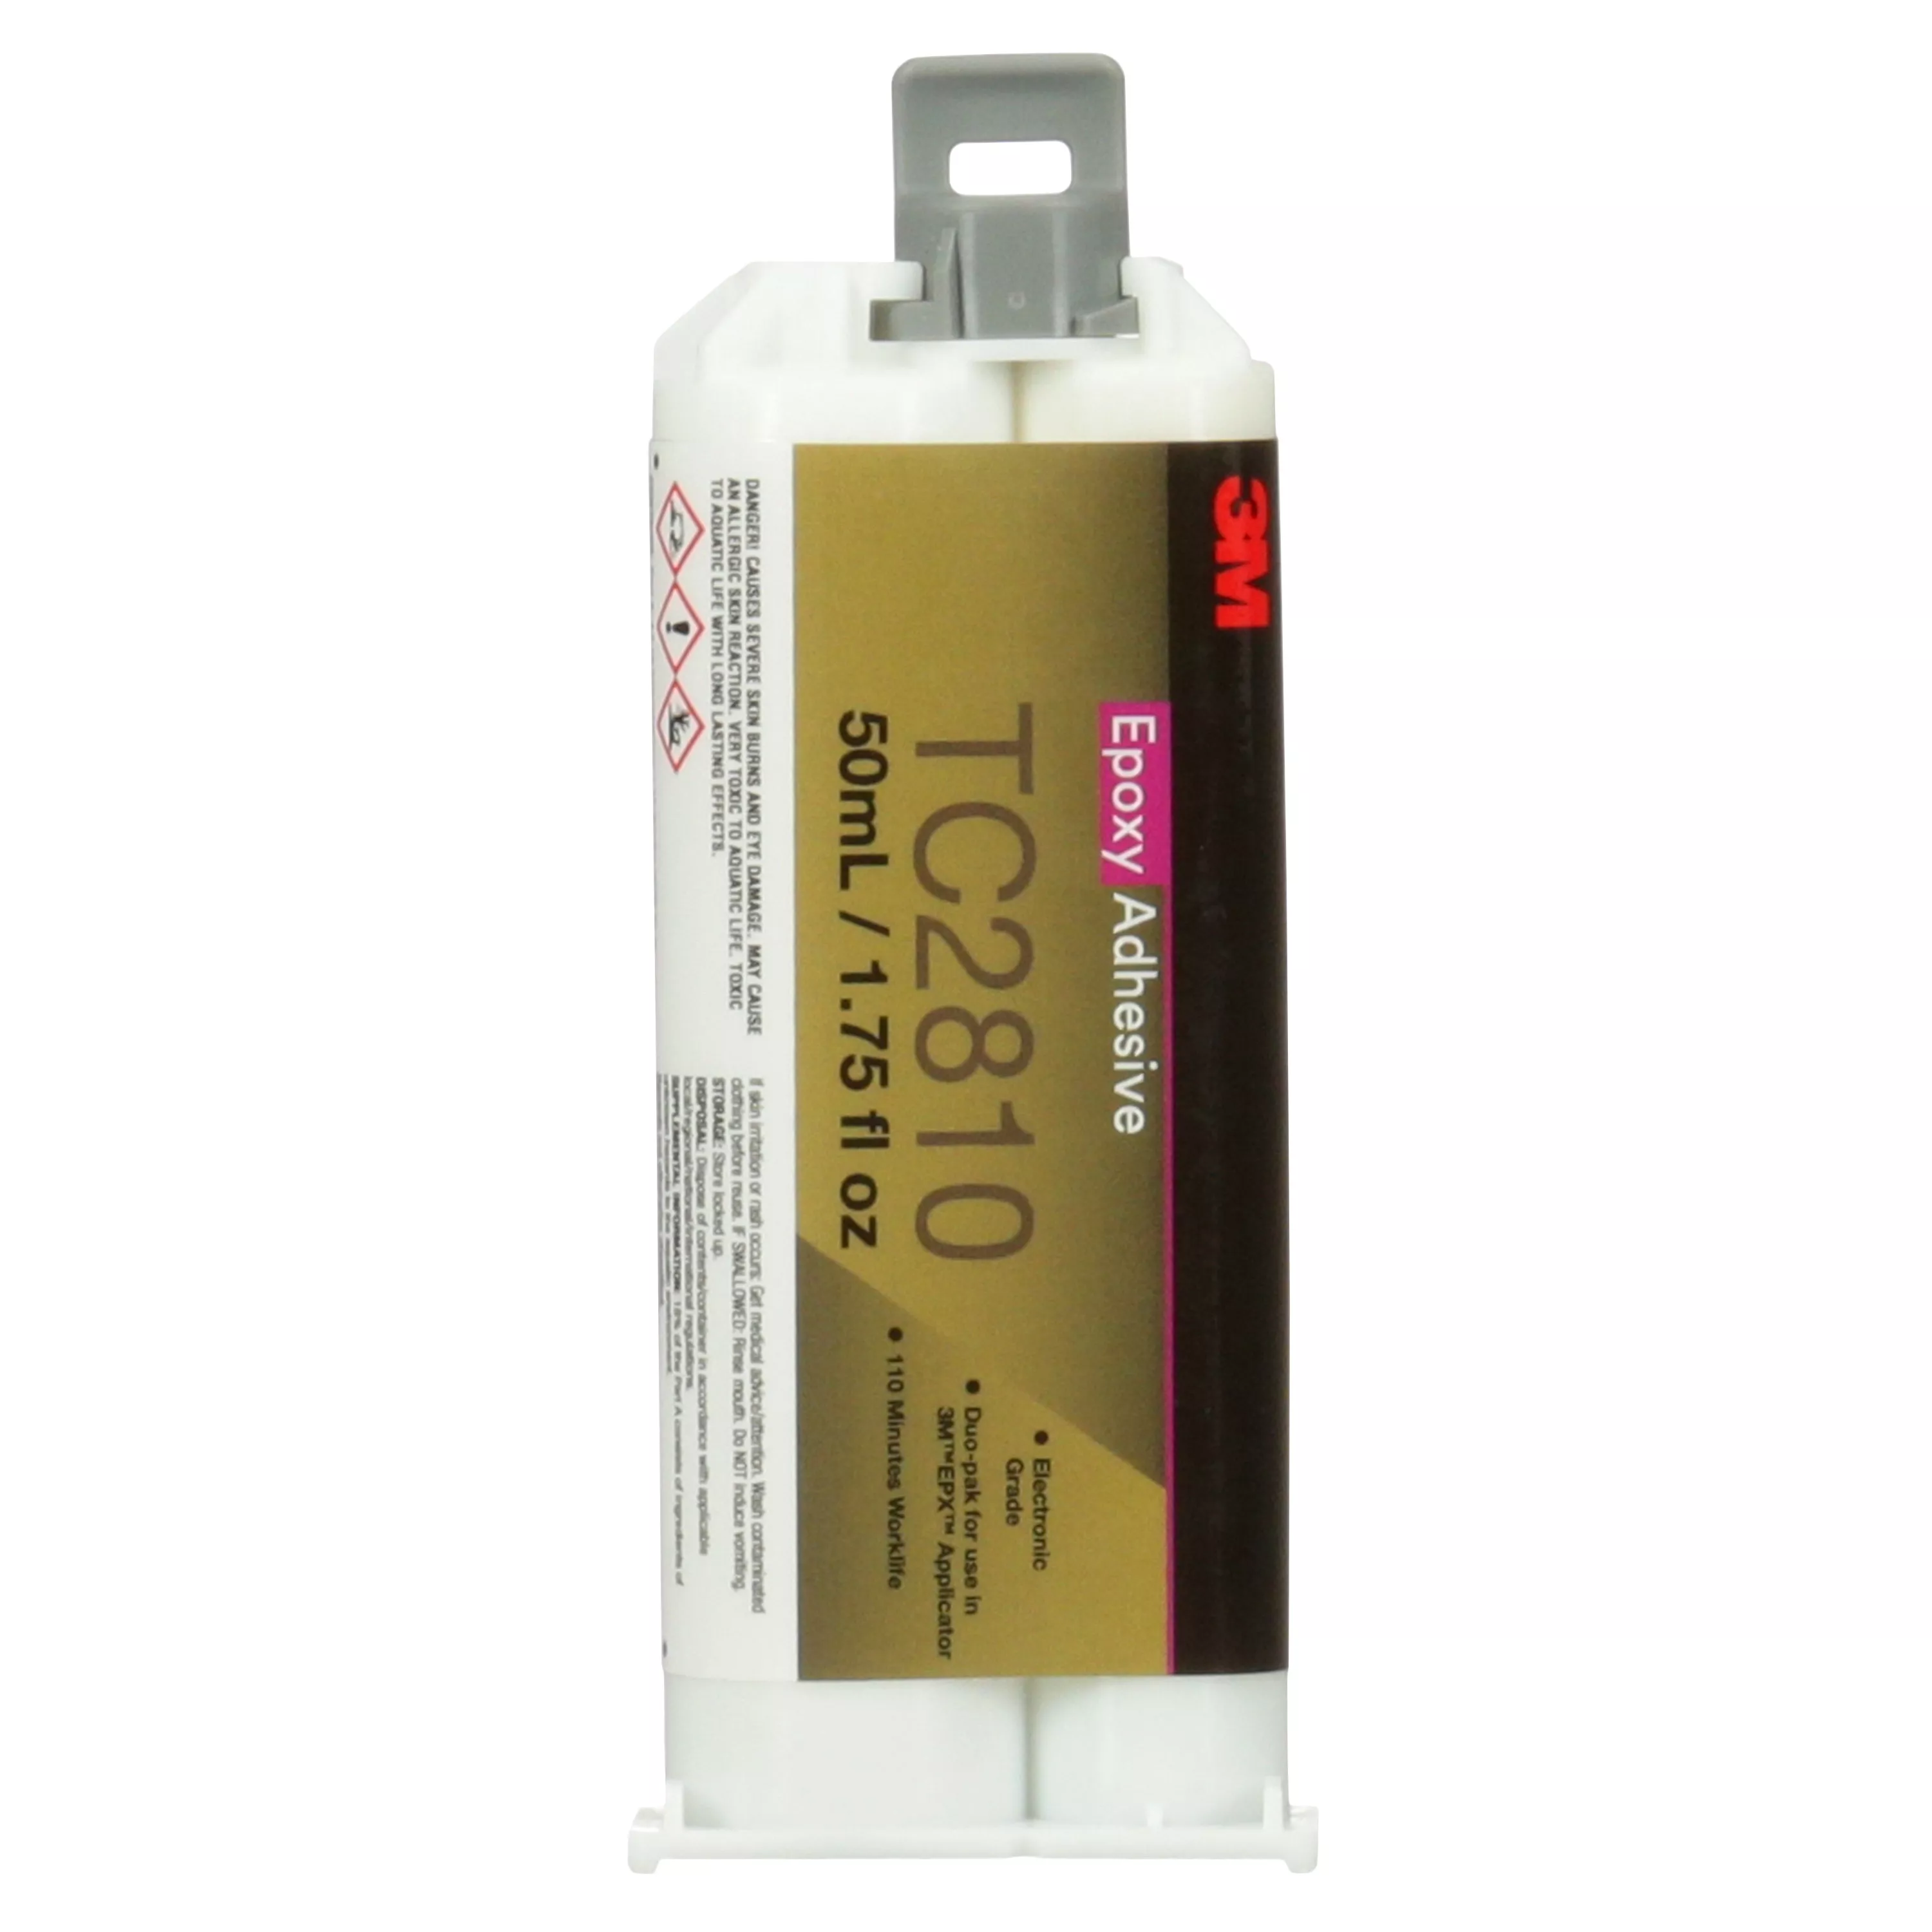 3M™ Thermally Conductive Epoxy Adhesive TC2810 Part A, 5-gal (23 kg)
Pail